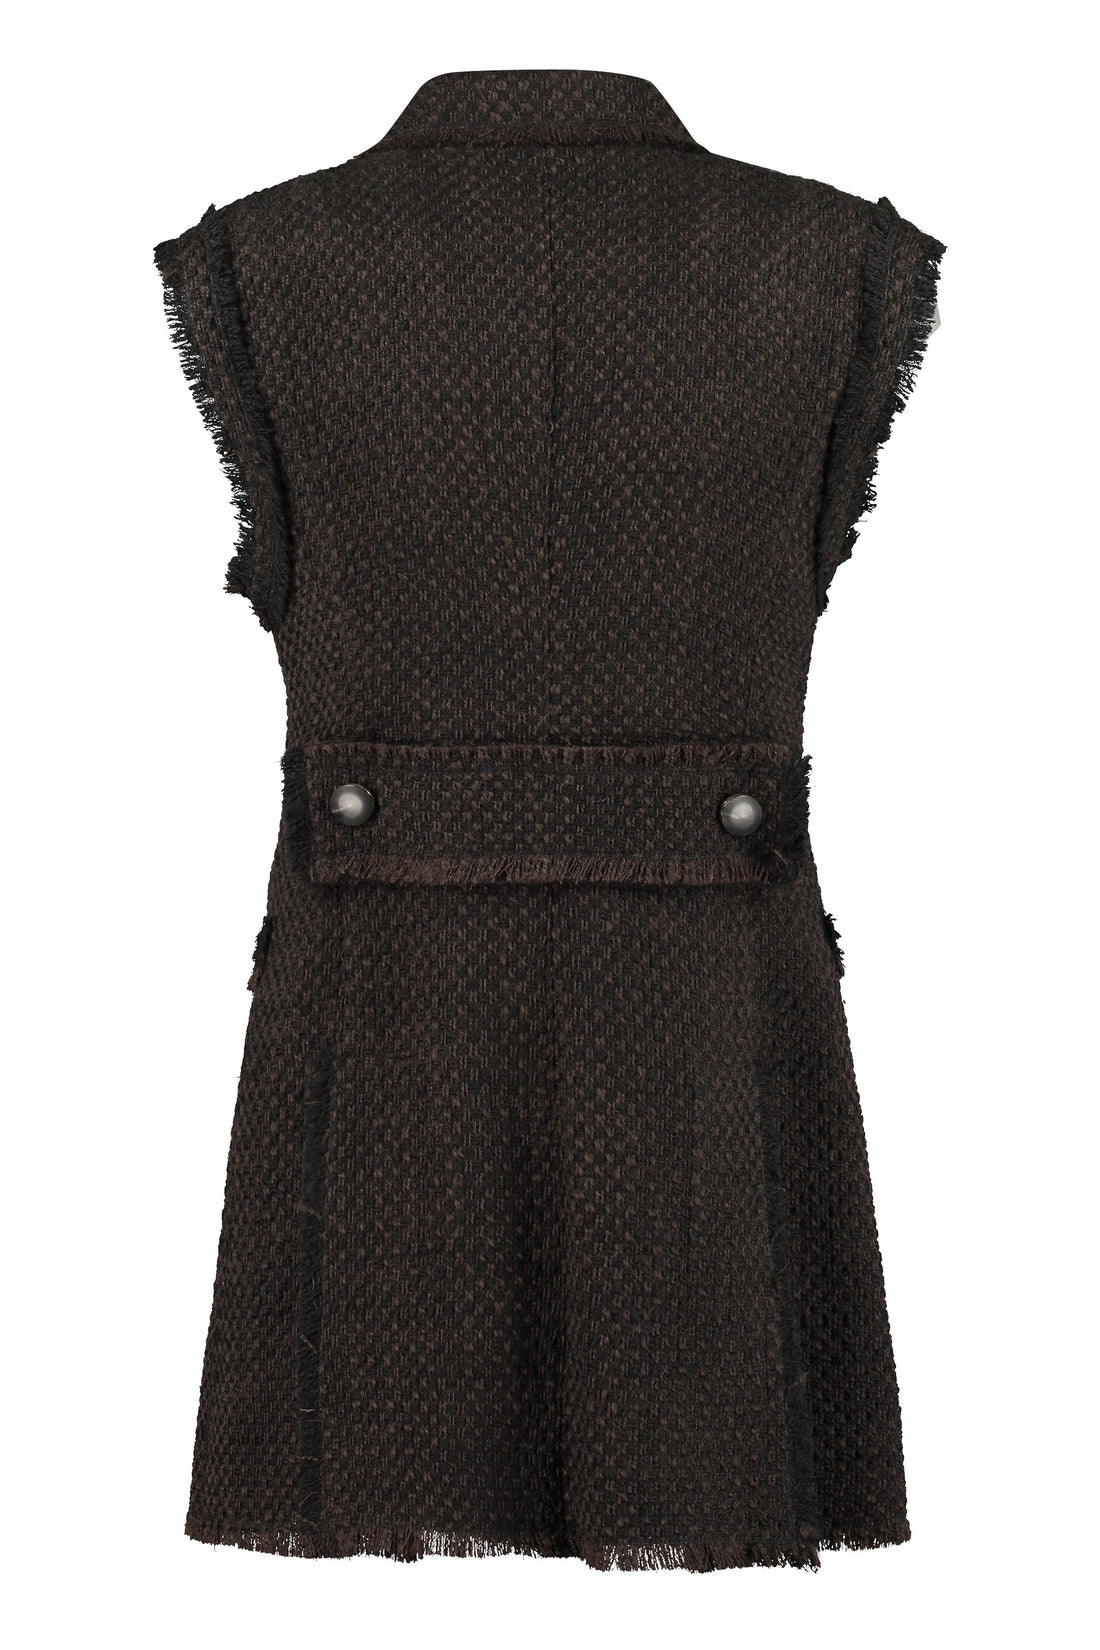 Dolce & Gabbana-OUTLET-SALE-Wool blend waistcoat-ARCHIVIST